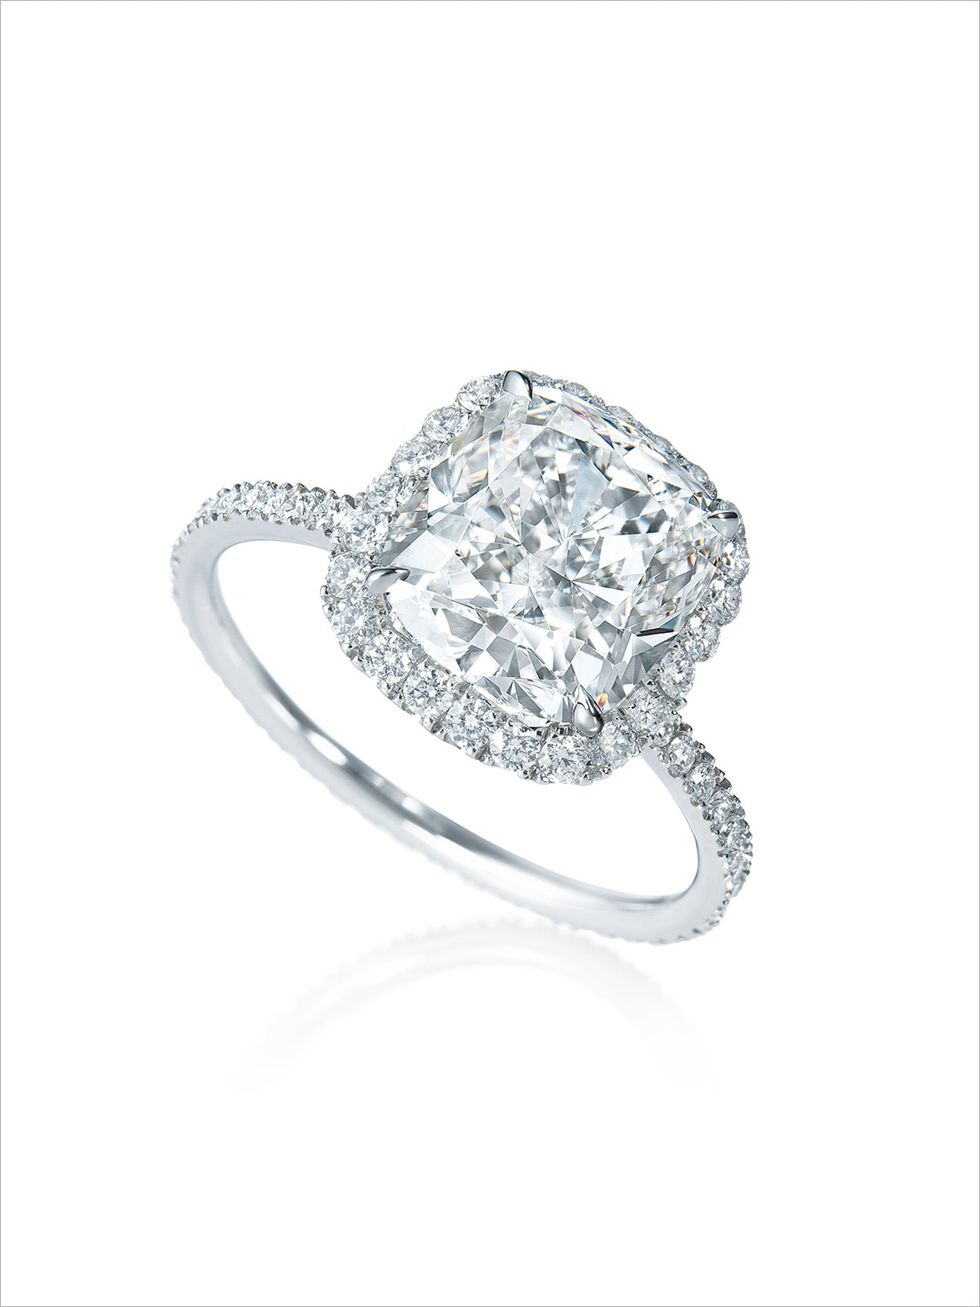 Ring, Jewellery, Engagement ring, Pre-engagement ring, Diamond, Fashion accessory, Platinum, Body jewelry, Gemstone, Wedding ring, 